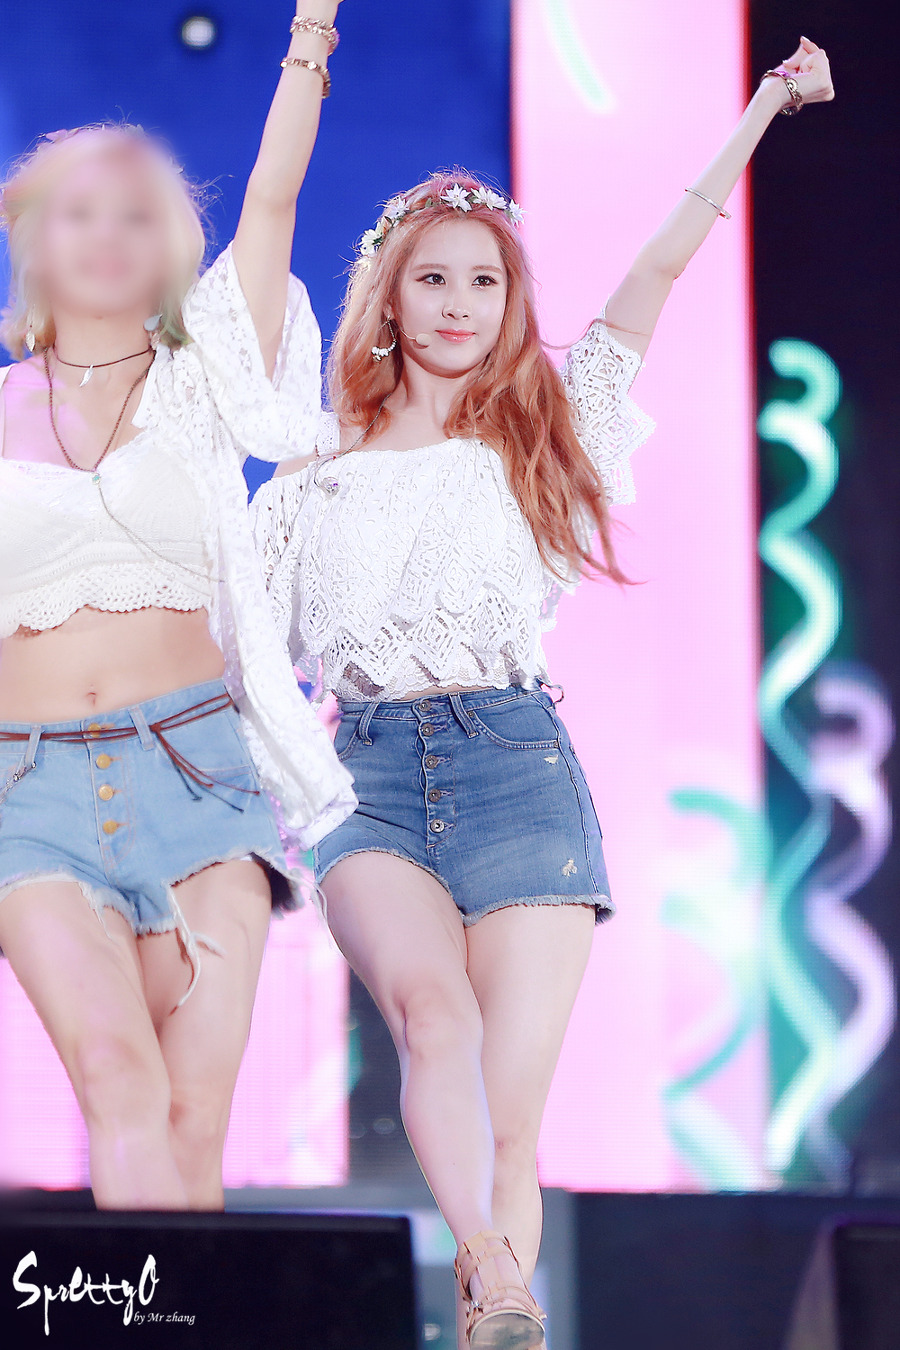 [PIC][27-07-2015]SNSD tham dự "MBC Music Core Summer Festival" tại Ulsan vào tối nay 260AC74555B9D9B10A22DC